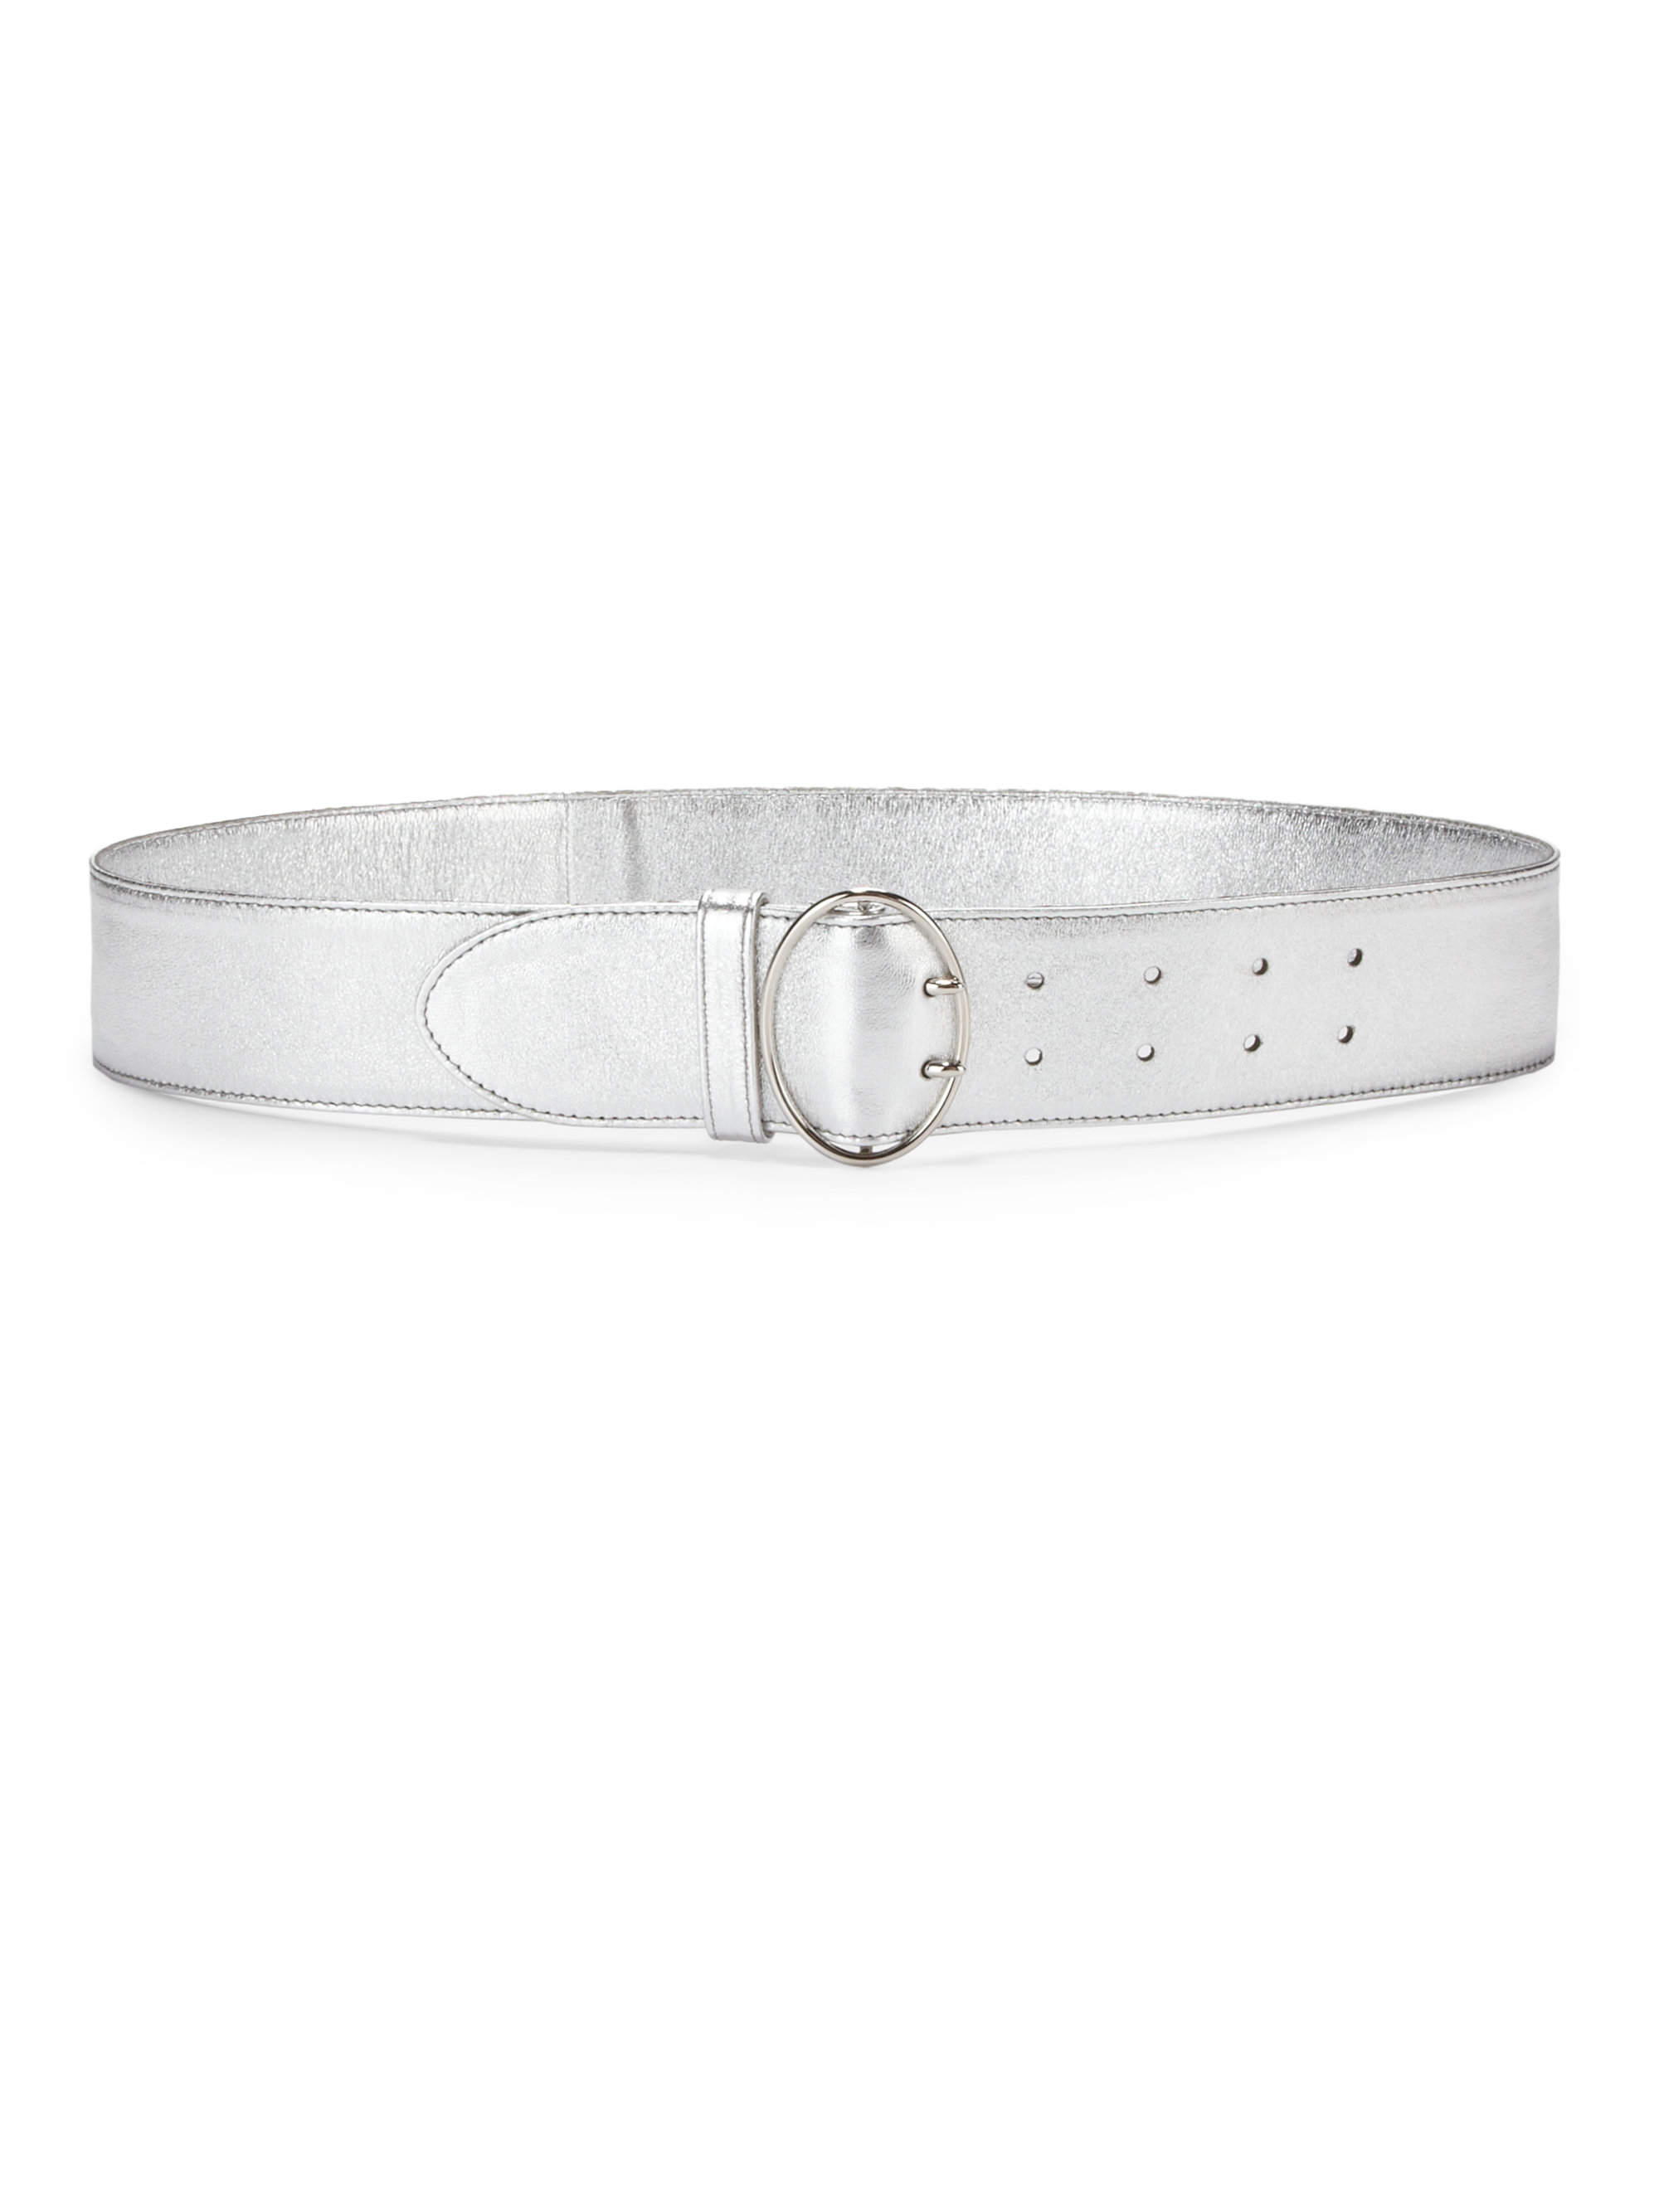 prada silver leather belt  